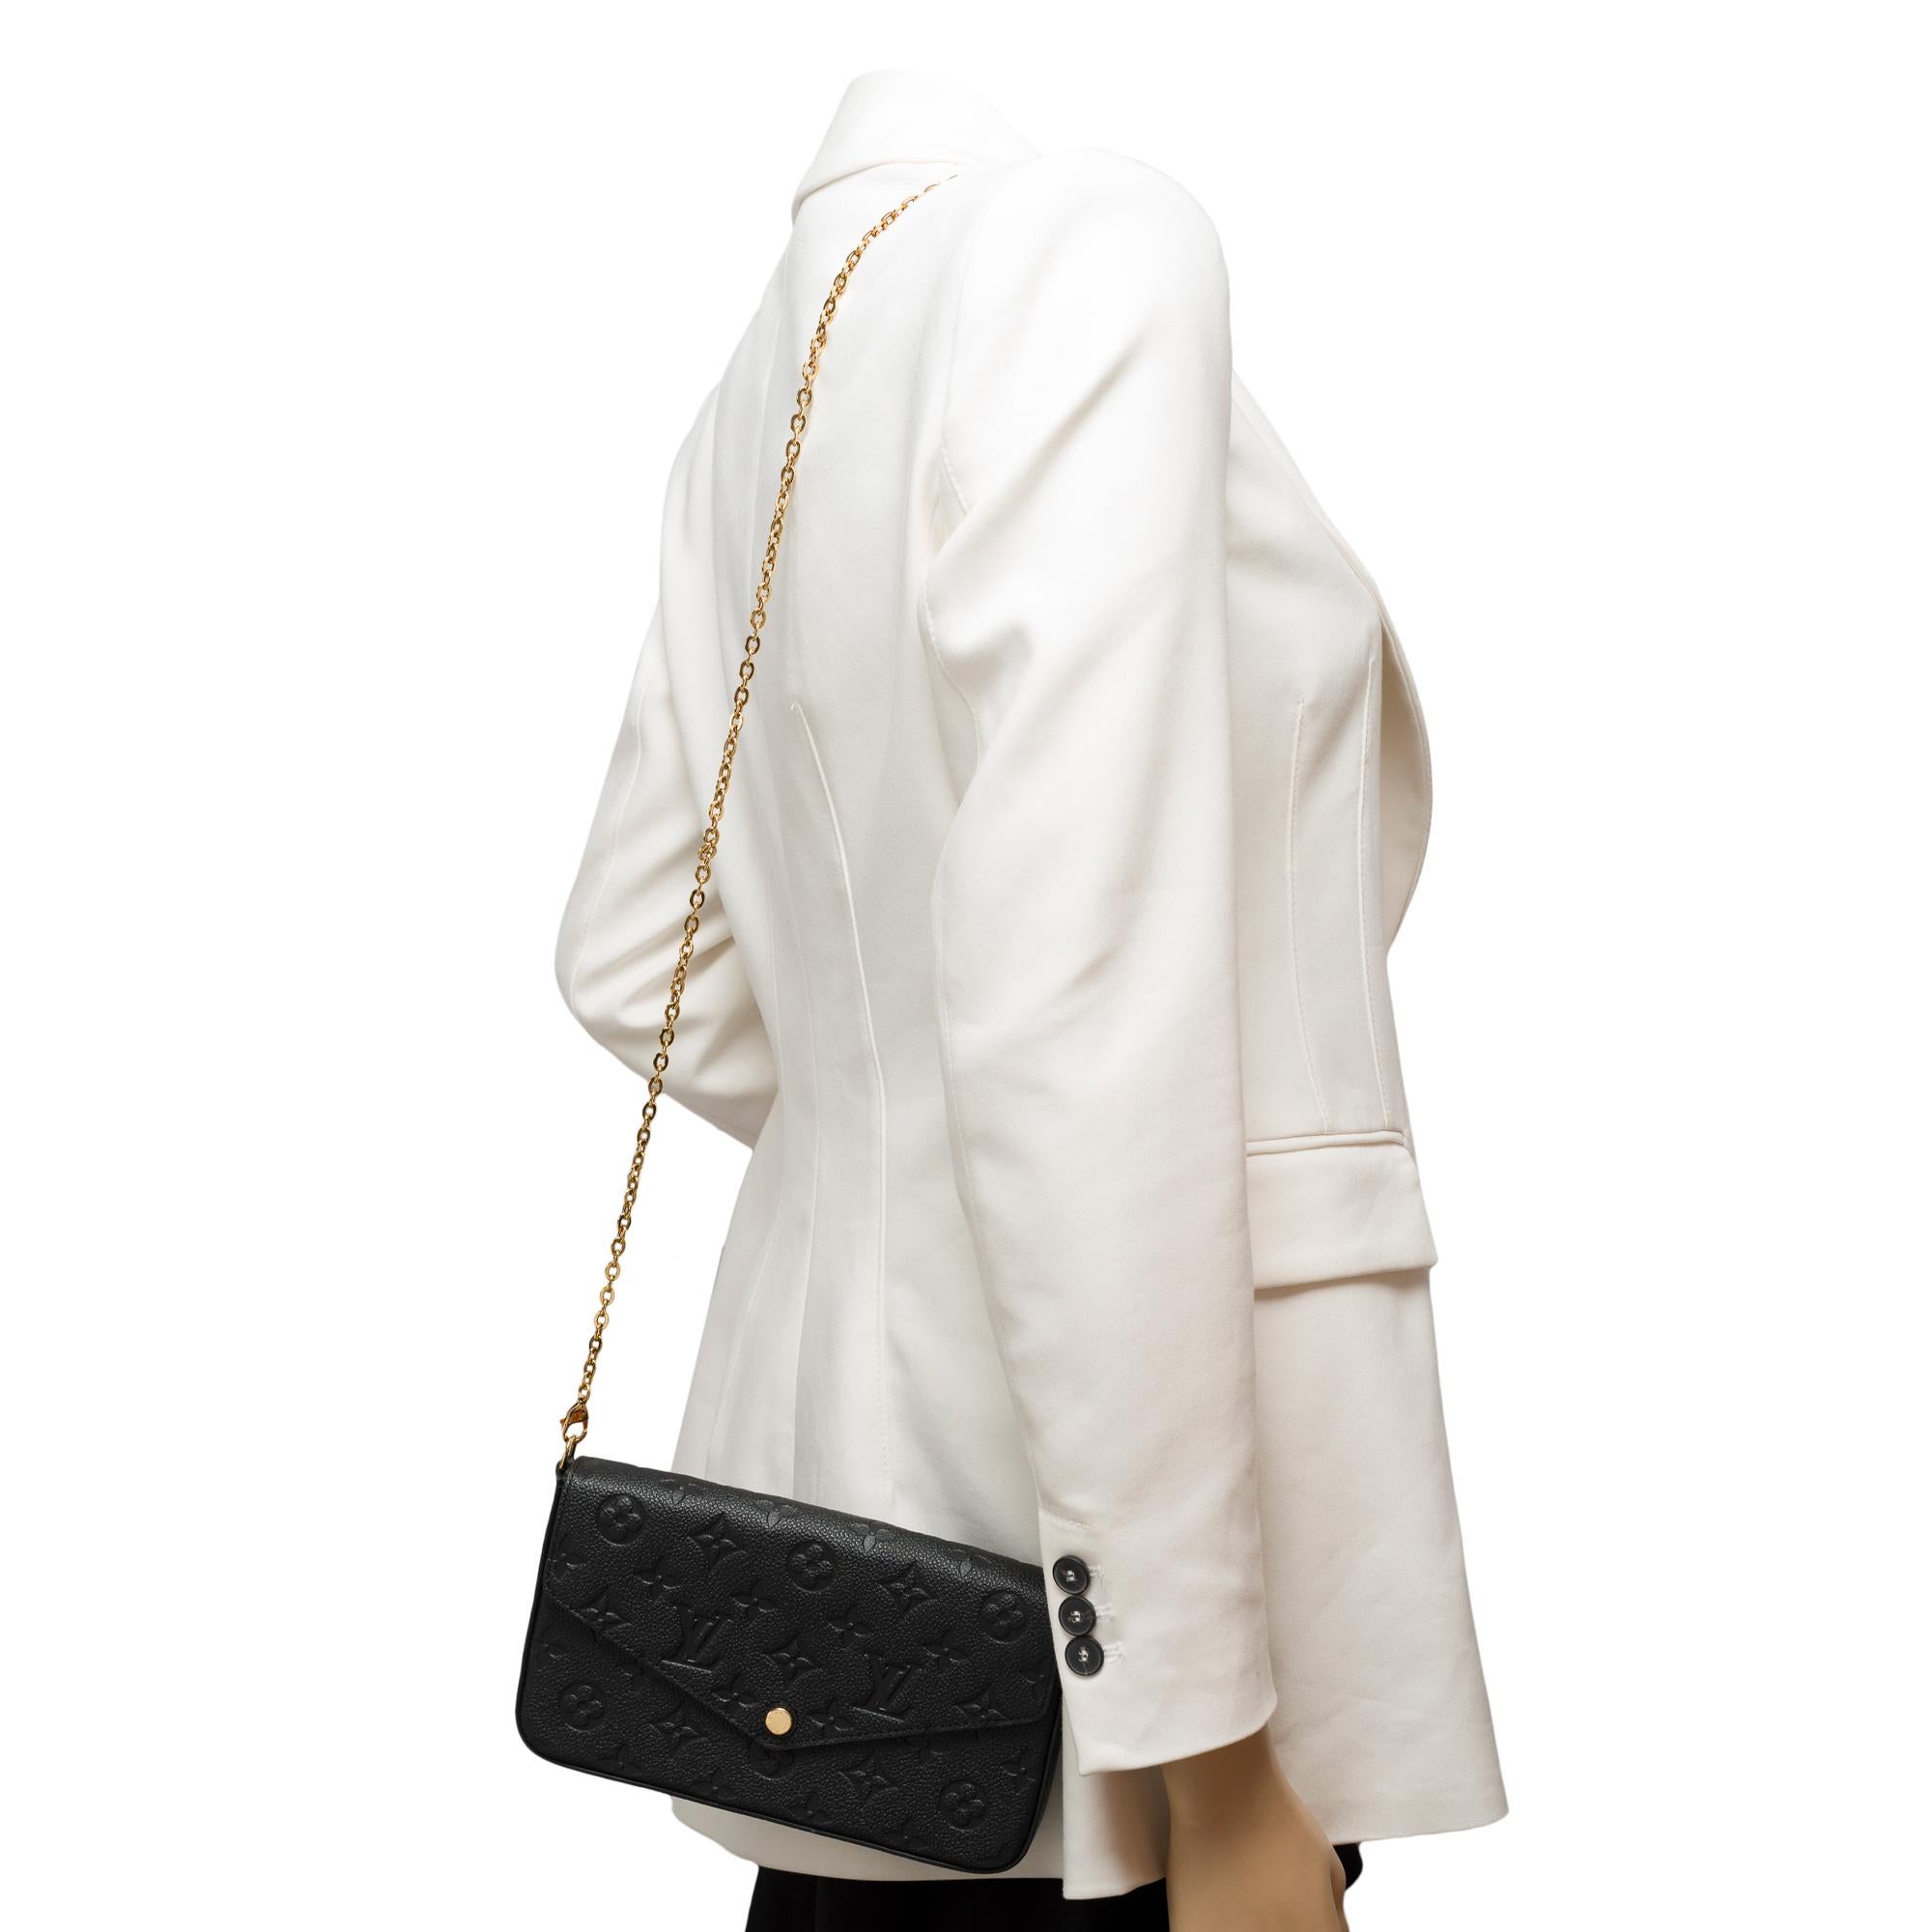 Louis Vuitton Felicie Pochette shoulder bag in black monogram leather, GHW For Sale 8